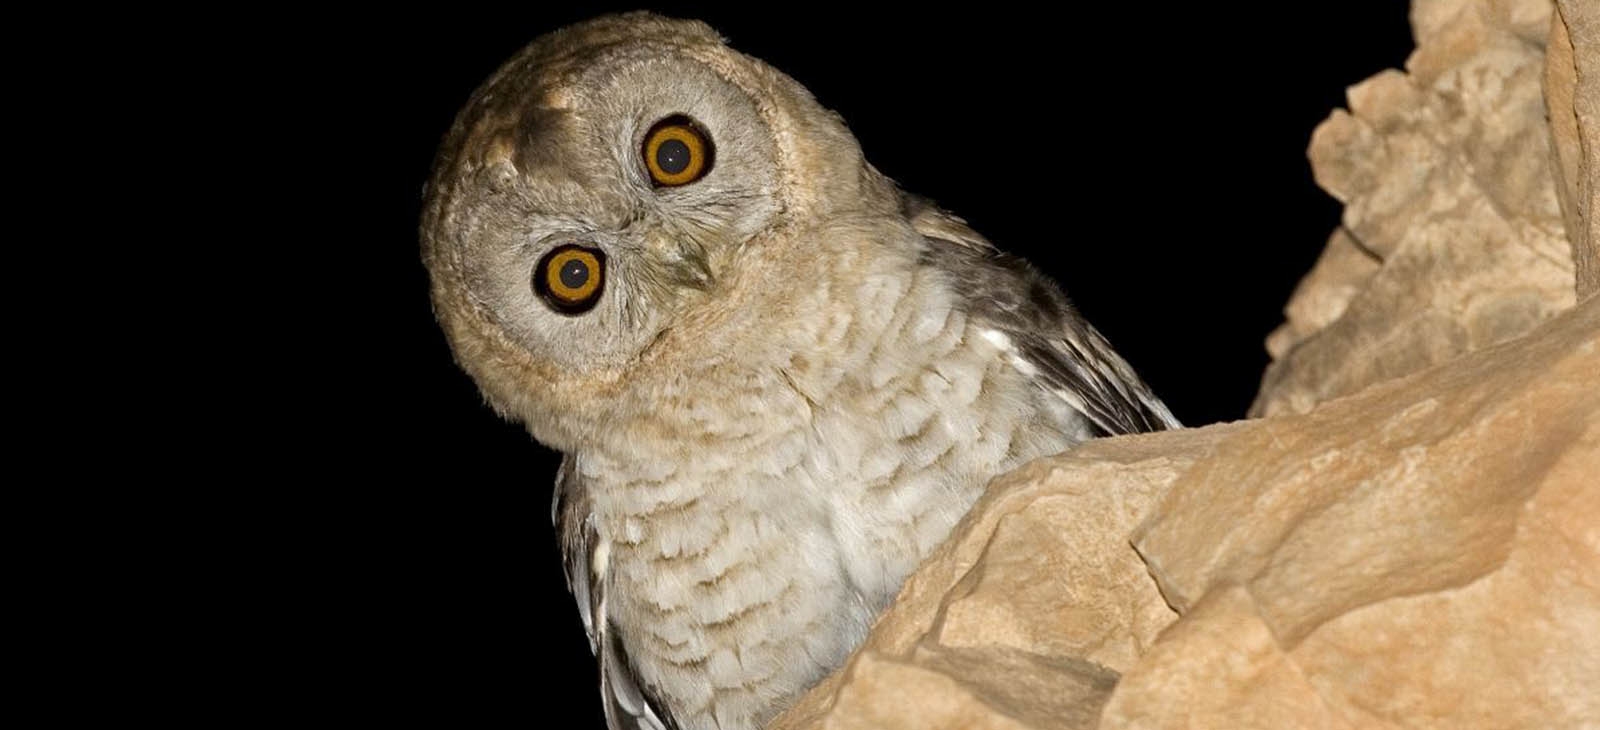 Hume's owl